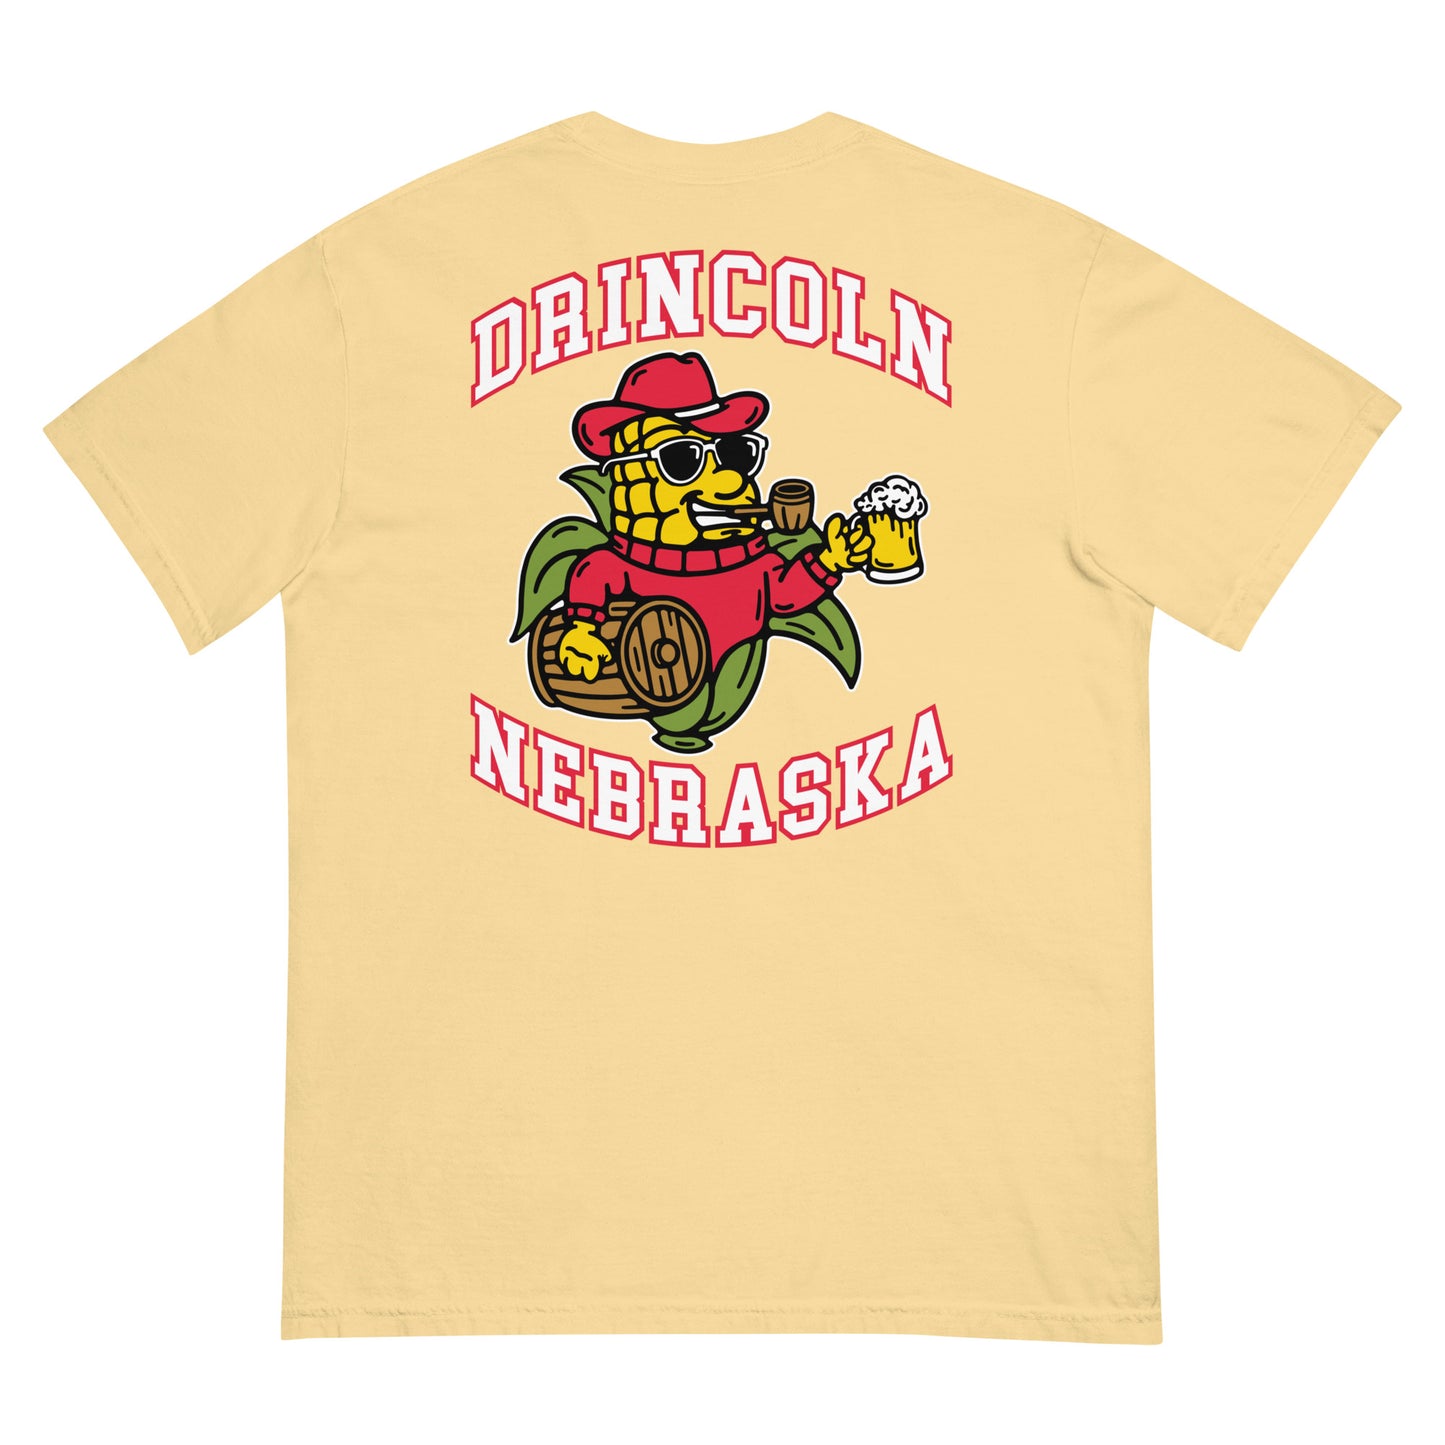 Drincoln Nebraska Front/Back